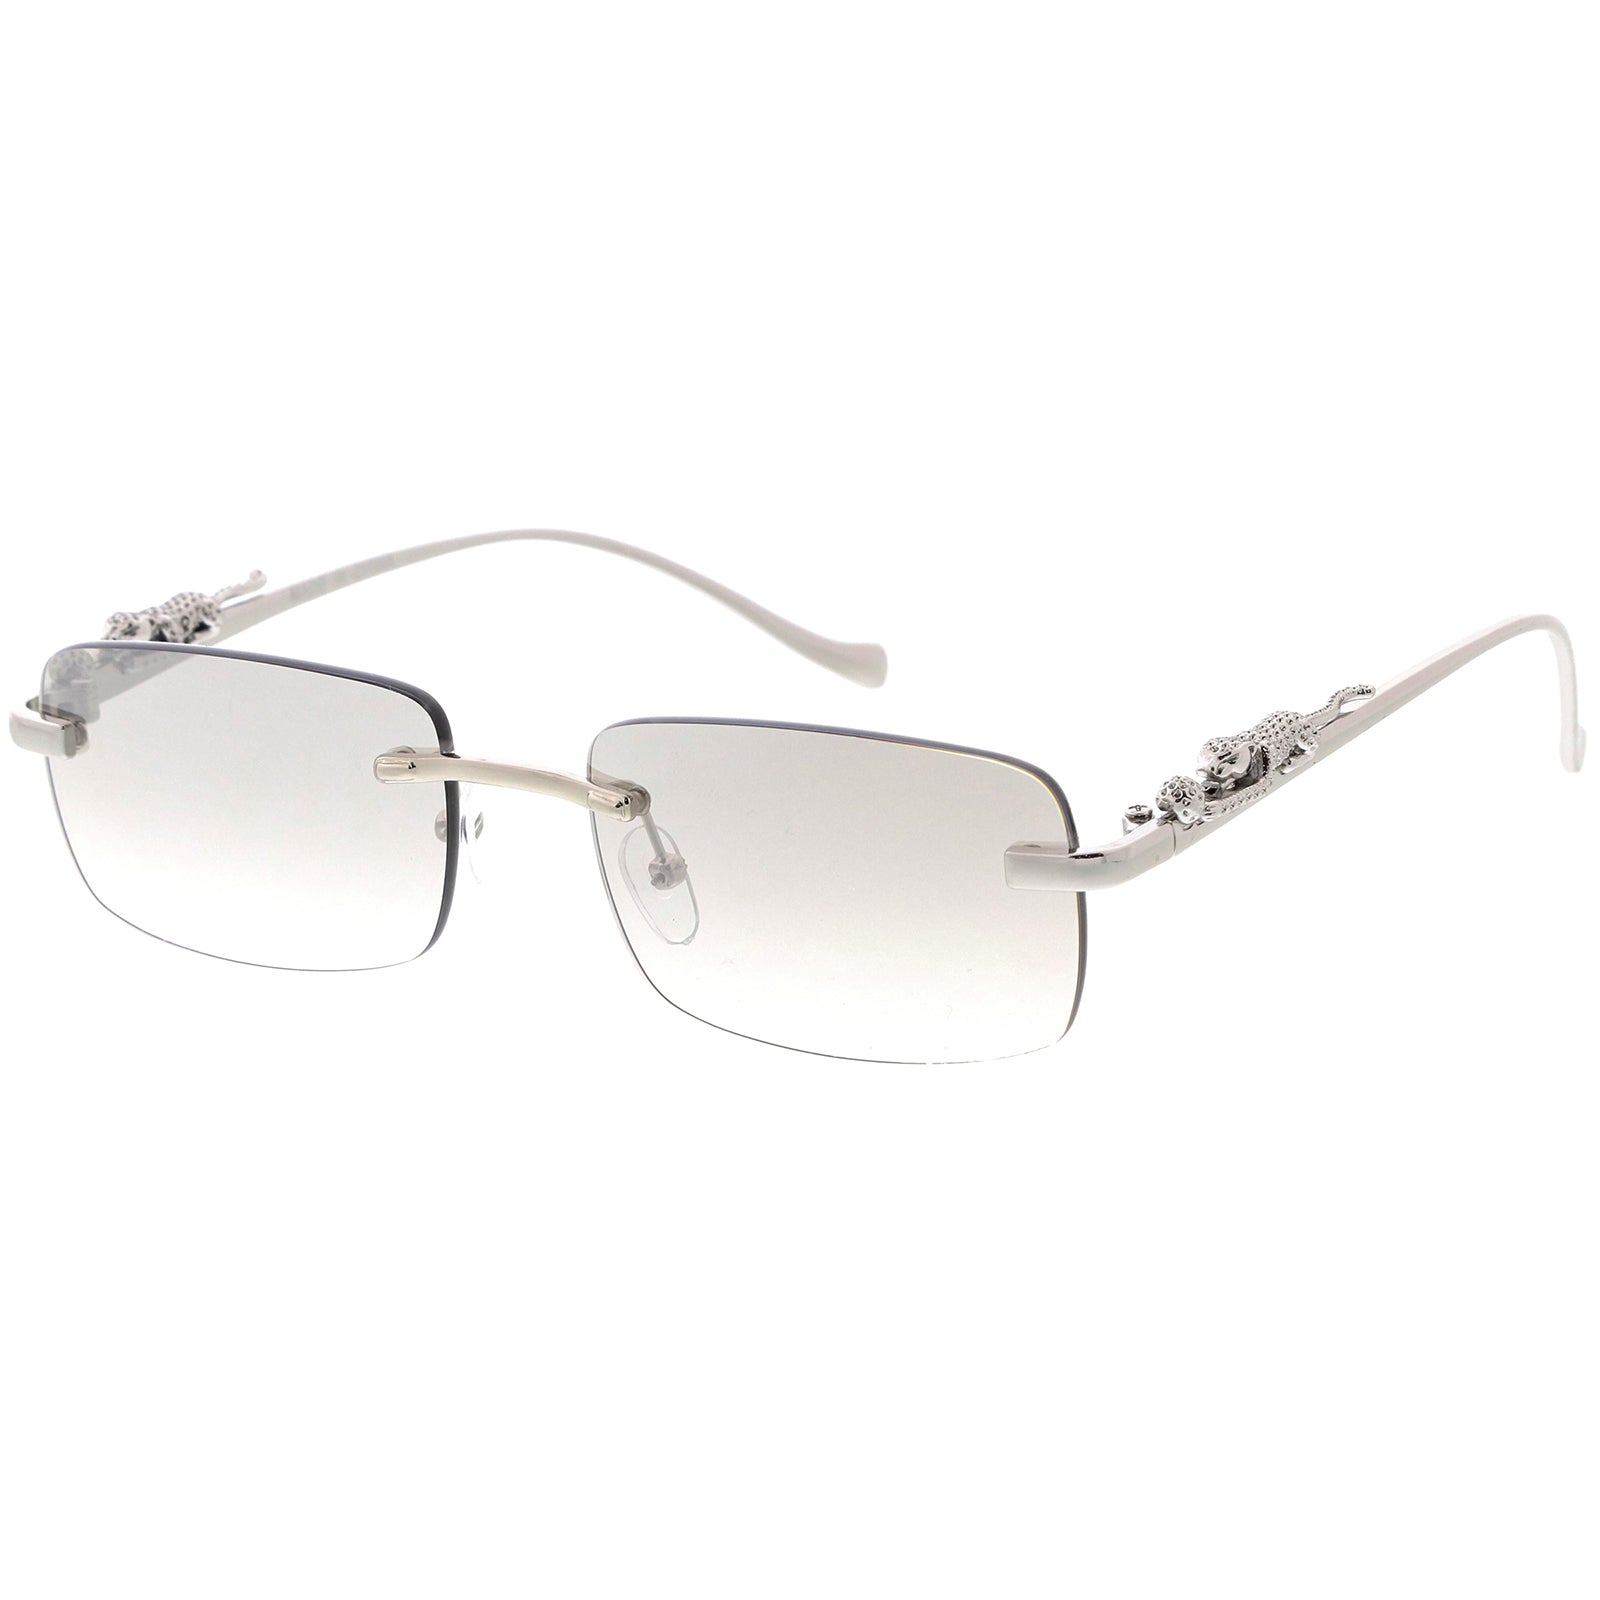 Jaguar Fashion Gold Plated Detail Small Square Sunglasses D216